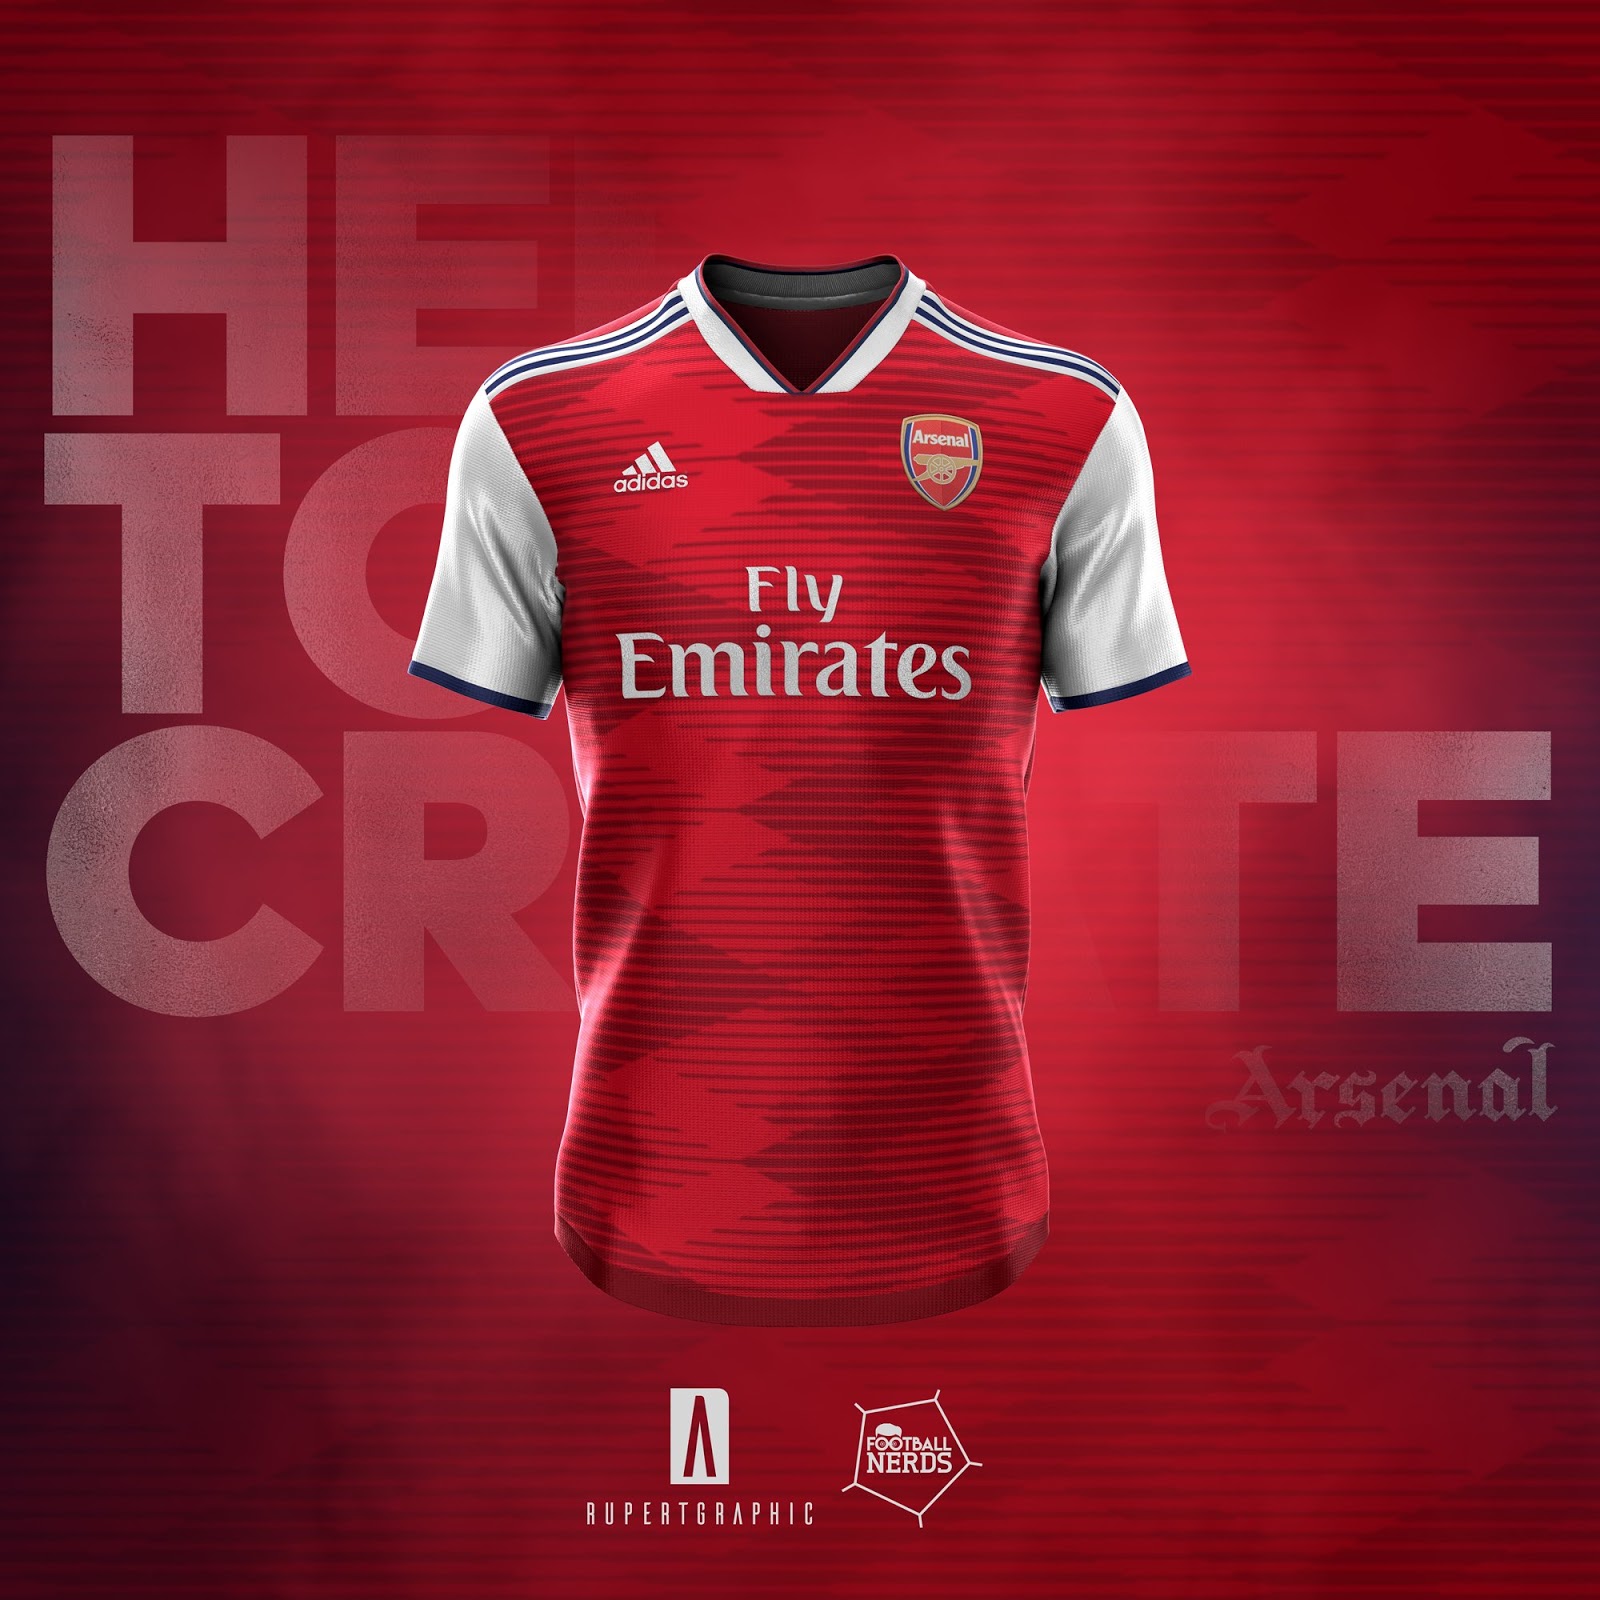 Stunning Adidas Arsenal 19-20 Home, Away & Third Kit Concepts ...